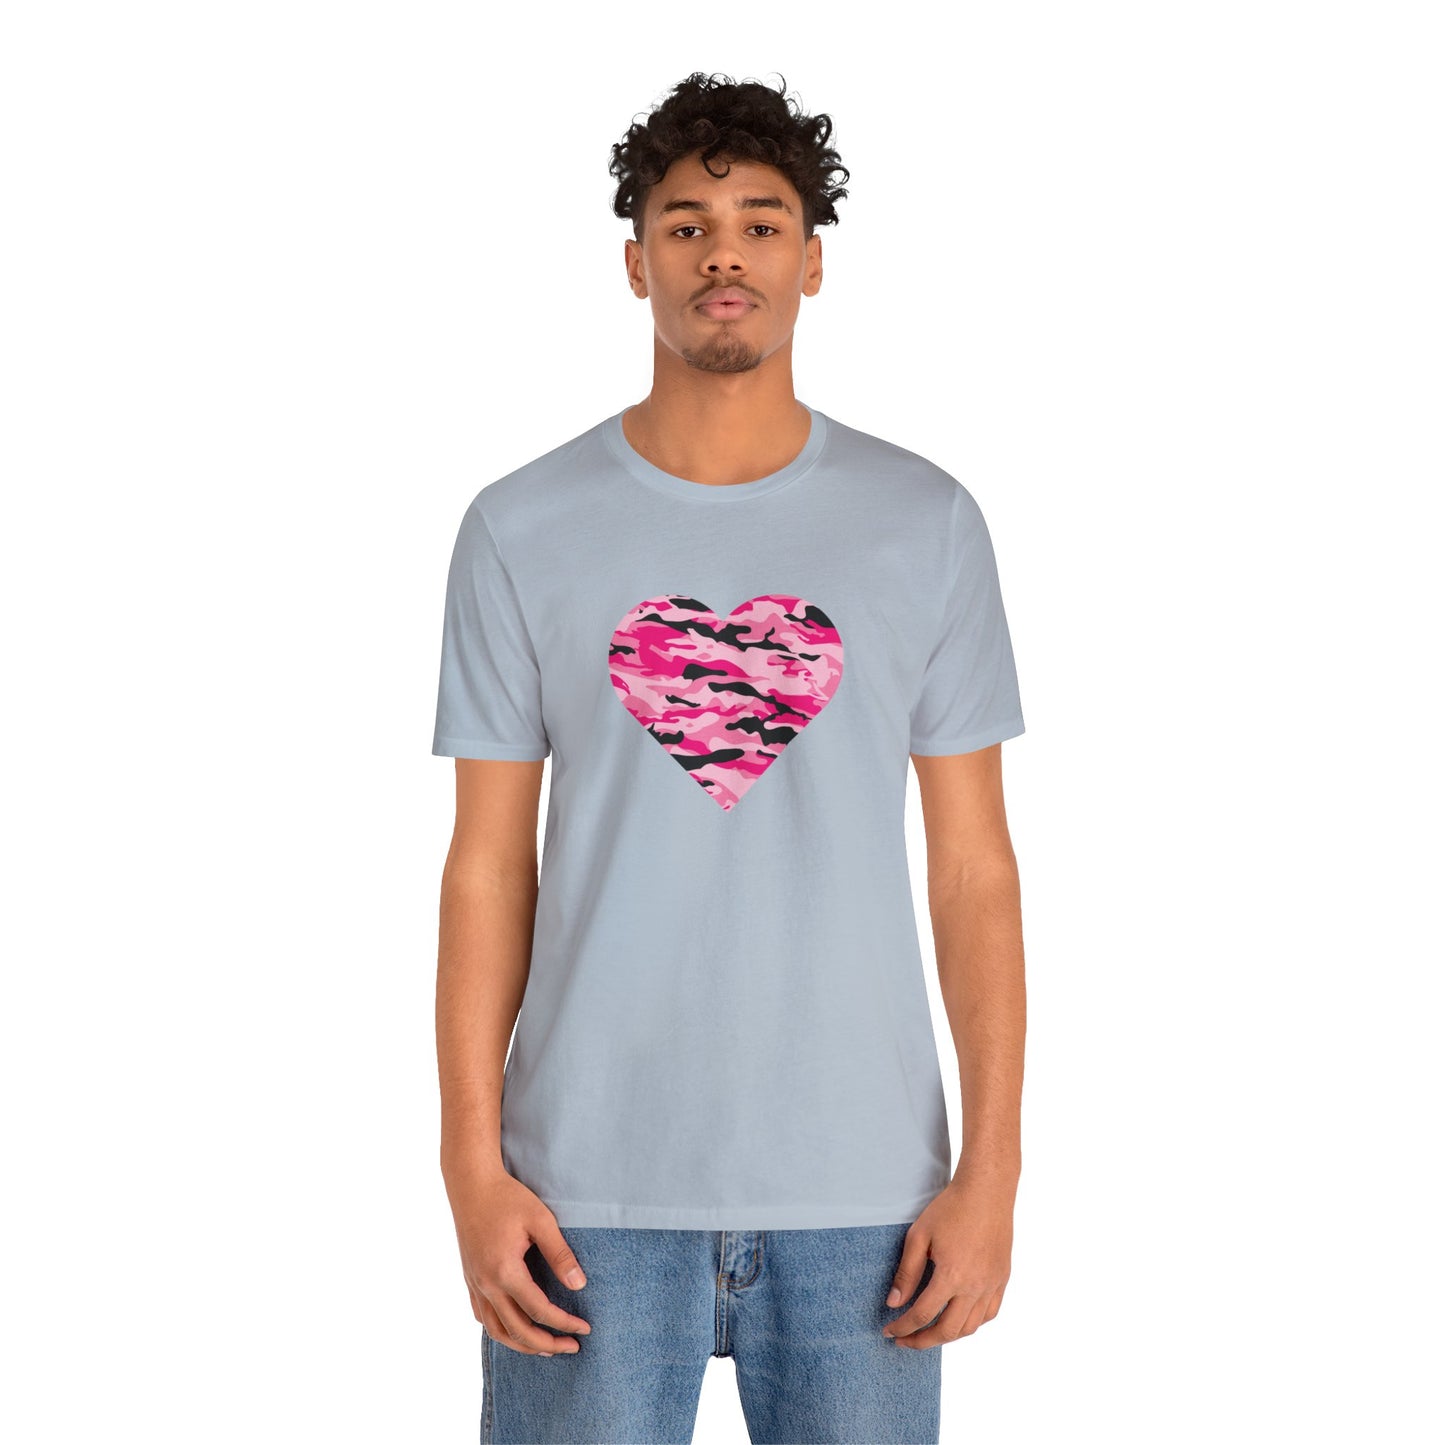 Valentines Short Sleeve Tee, Heart shirt, Love shirt